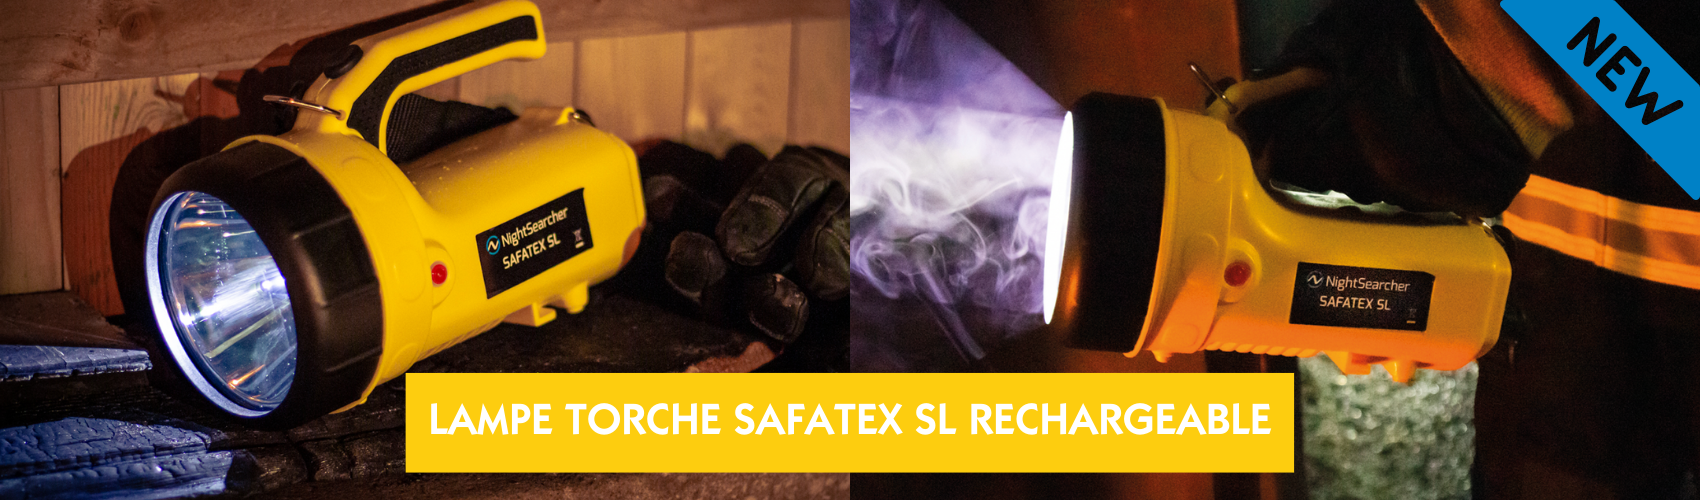 LAMPE TORCHE RECHARGEABLE SAFATEX SL ZONE 0 - Labérine Energie